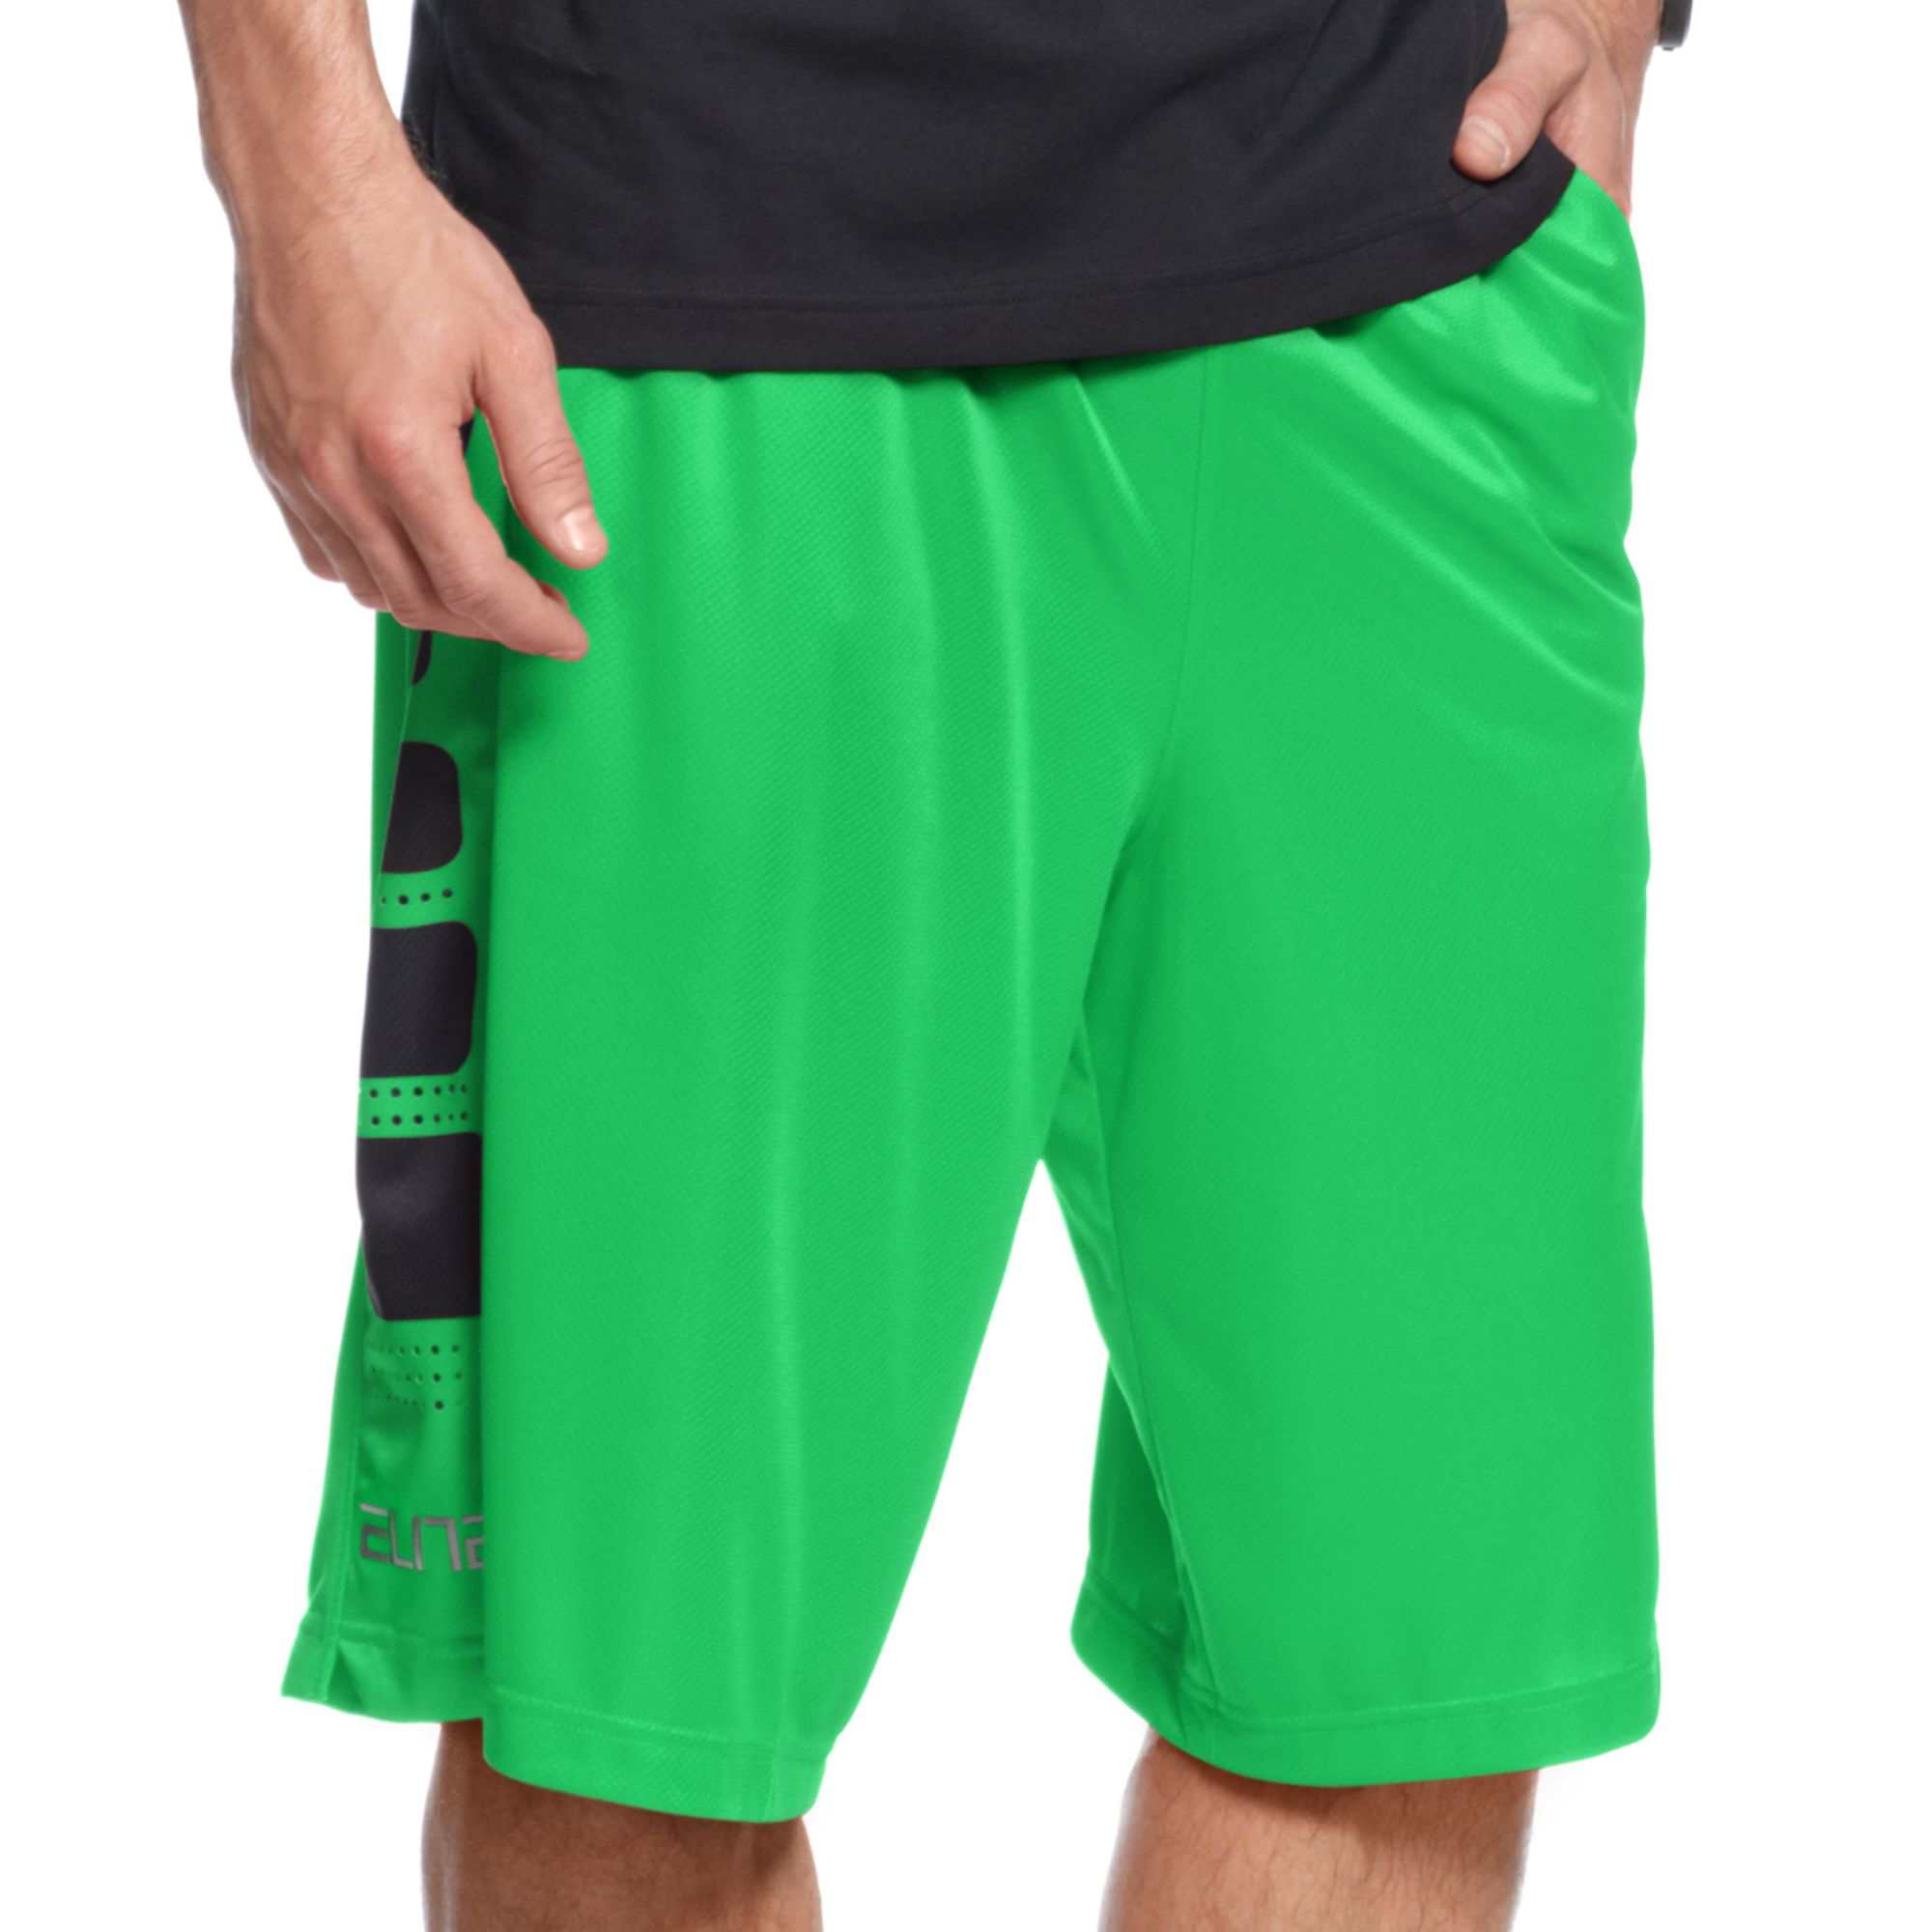 green nike basketball shorts